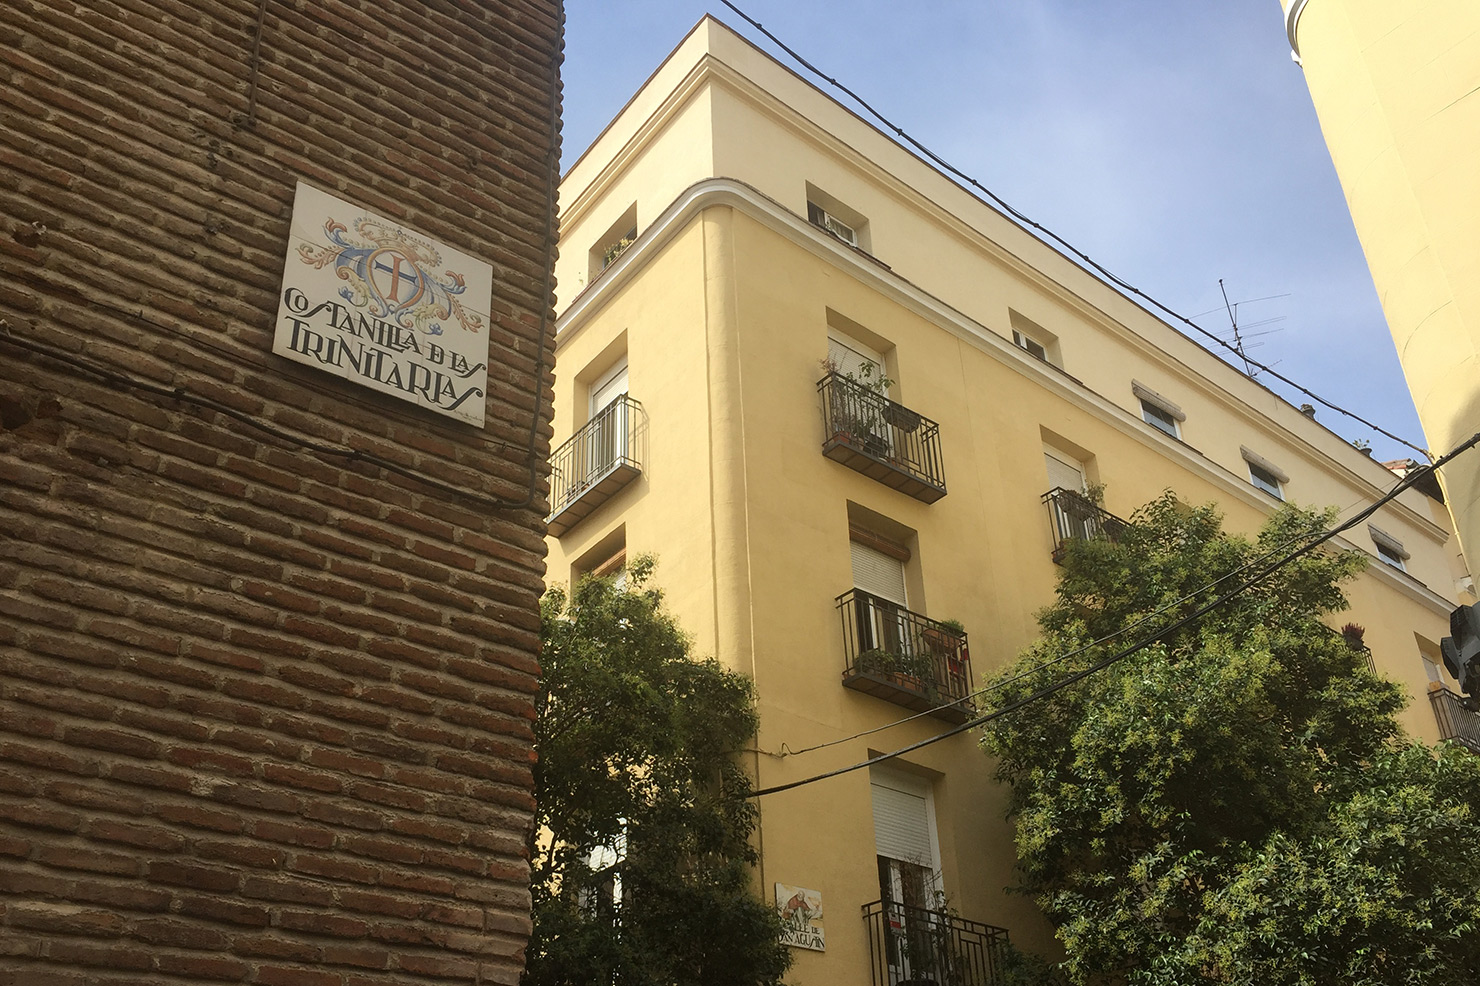 Tiled street sign in central Madrid, showing Costanilla de la Trinitaria.